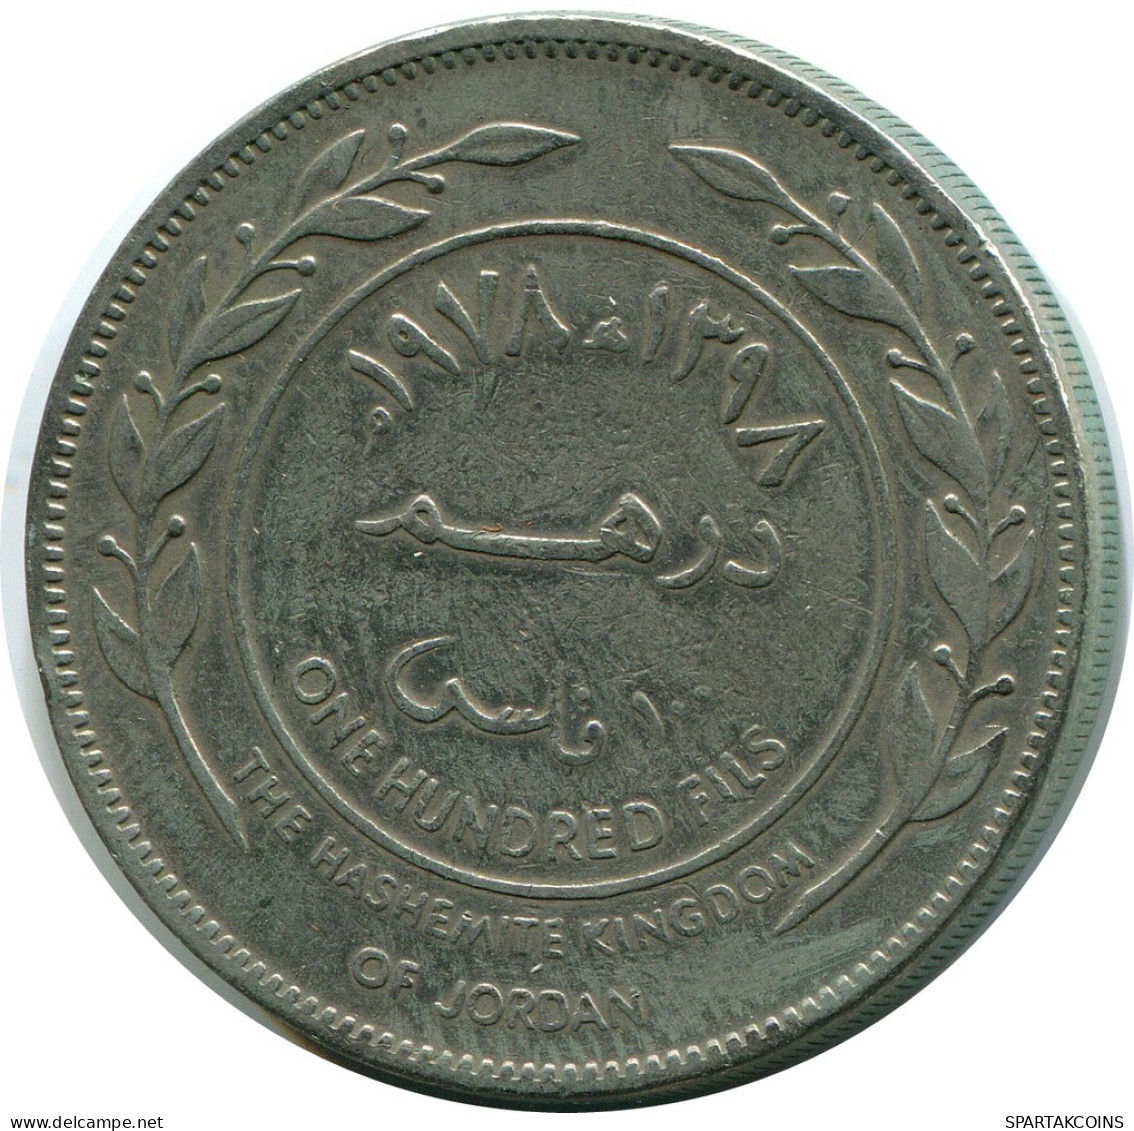 1 DIRHAM / 100 FILS 1978 JORDAN Coin #AP100.U - Jordanien